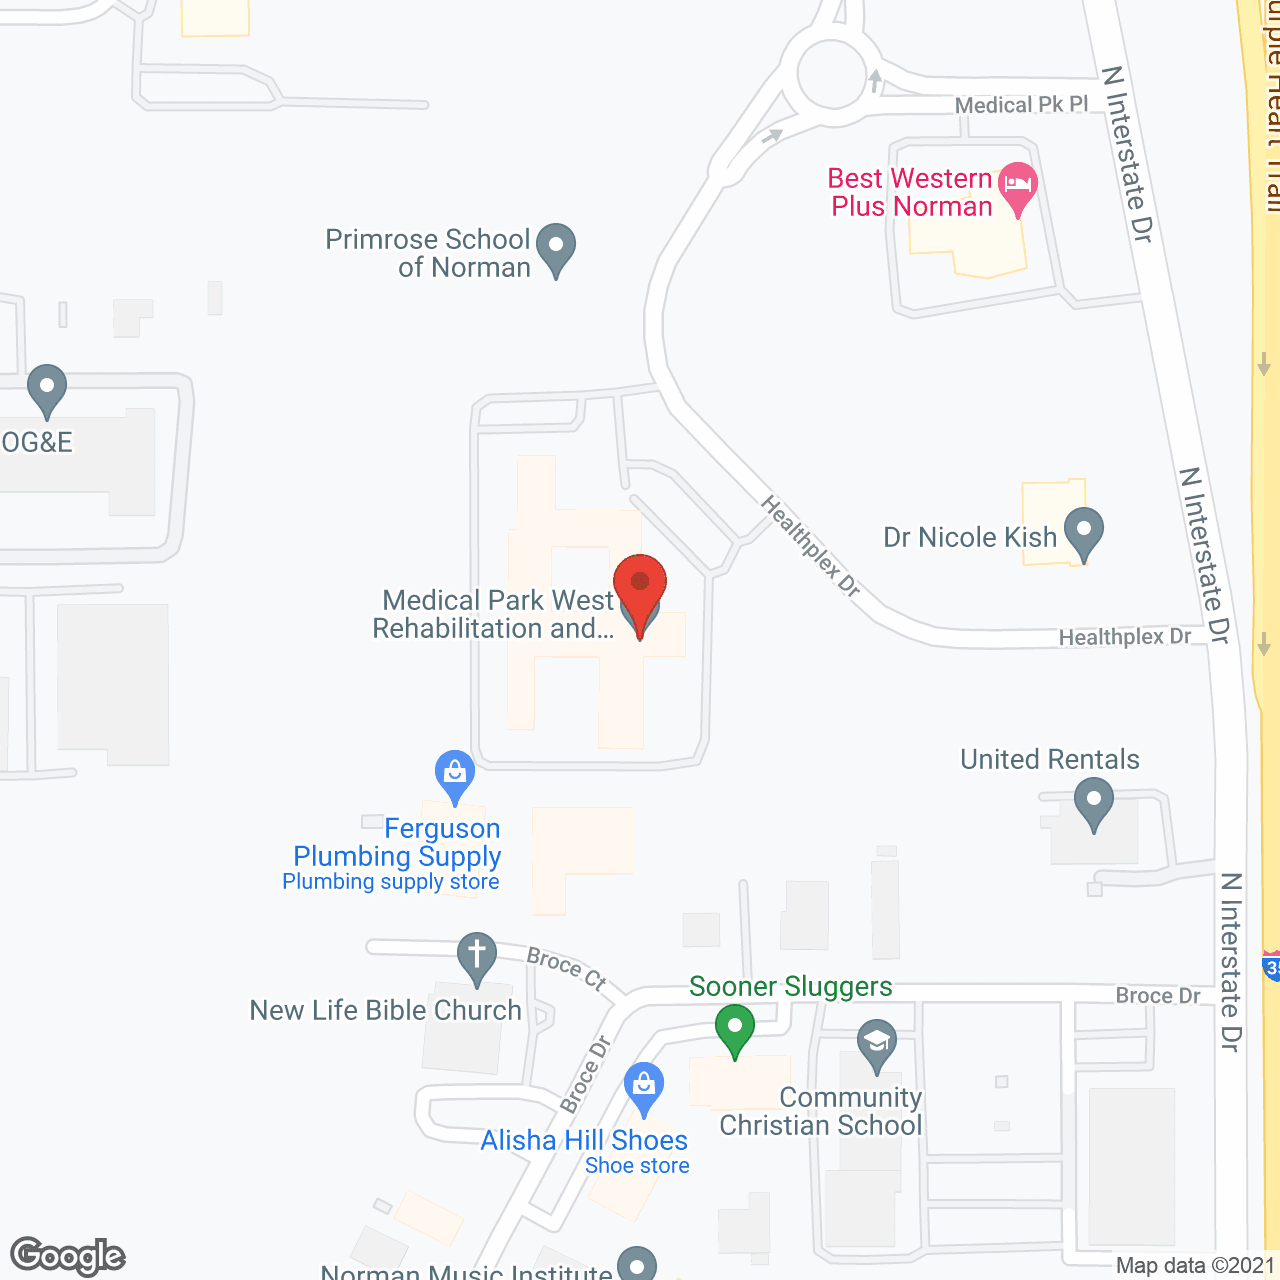 Medical Park West Rehabilitation in google map